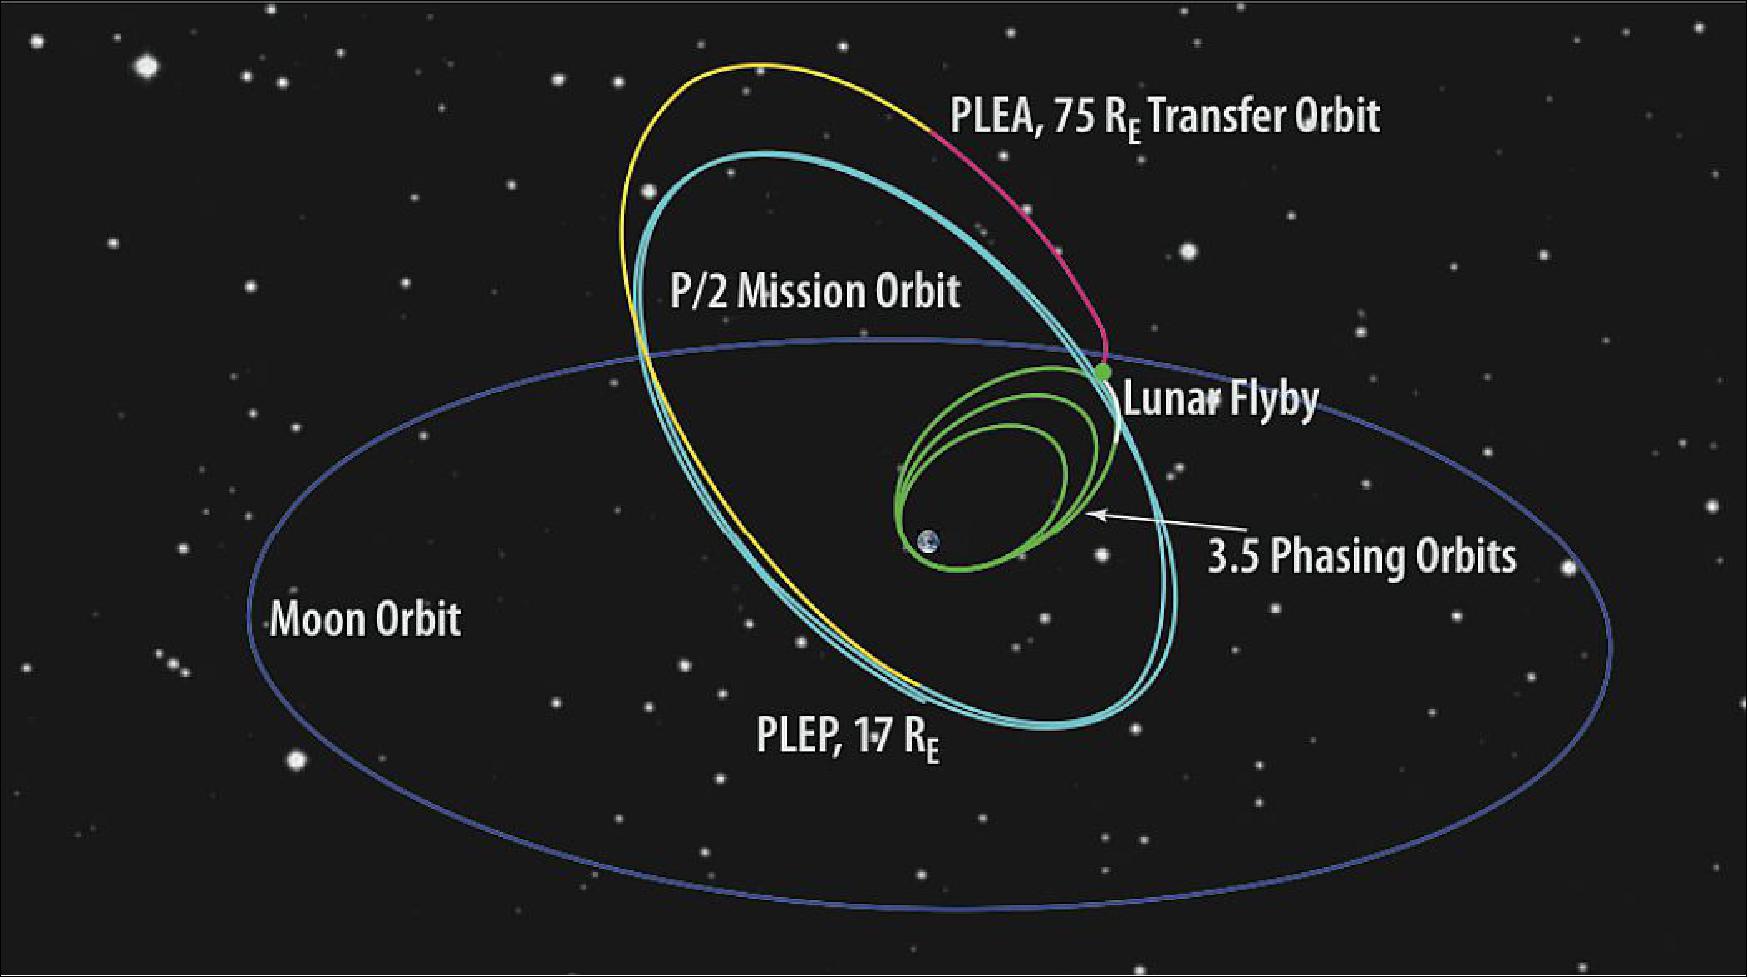 Figure 7: Maneuvers and scenario for achieving the TESS mission orbit. PLEP (Post Lunar-Encounter Perigee) and PLEA (Post Lunar-Encounter Apogee), image credit: TESS Team